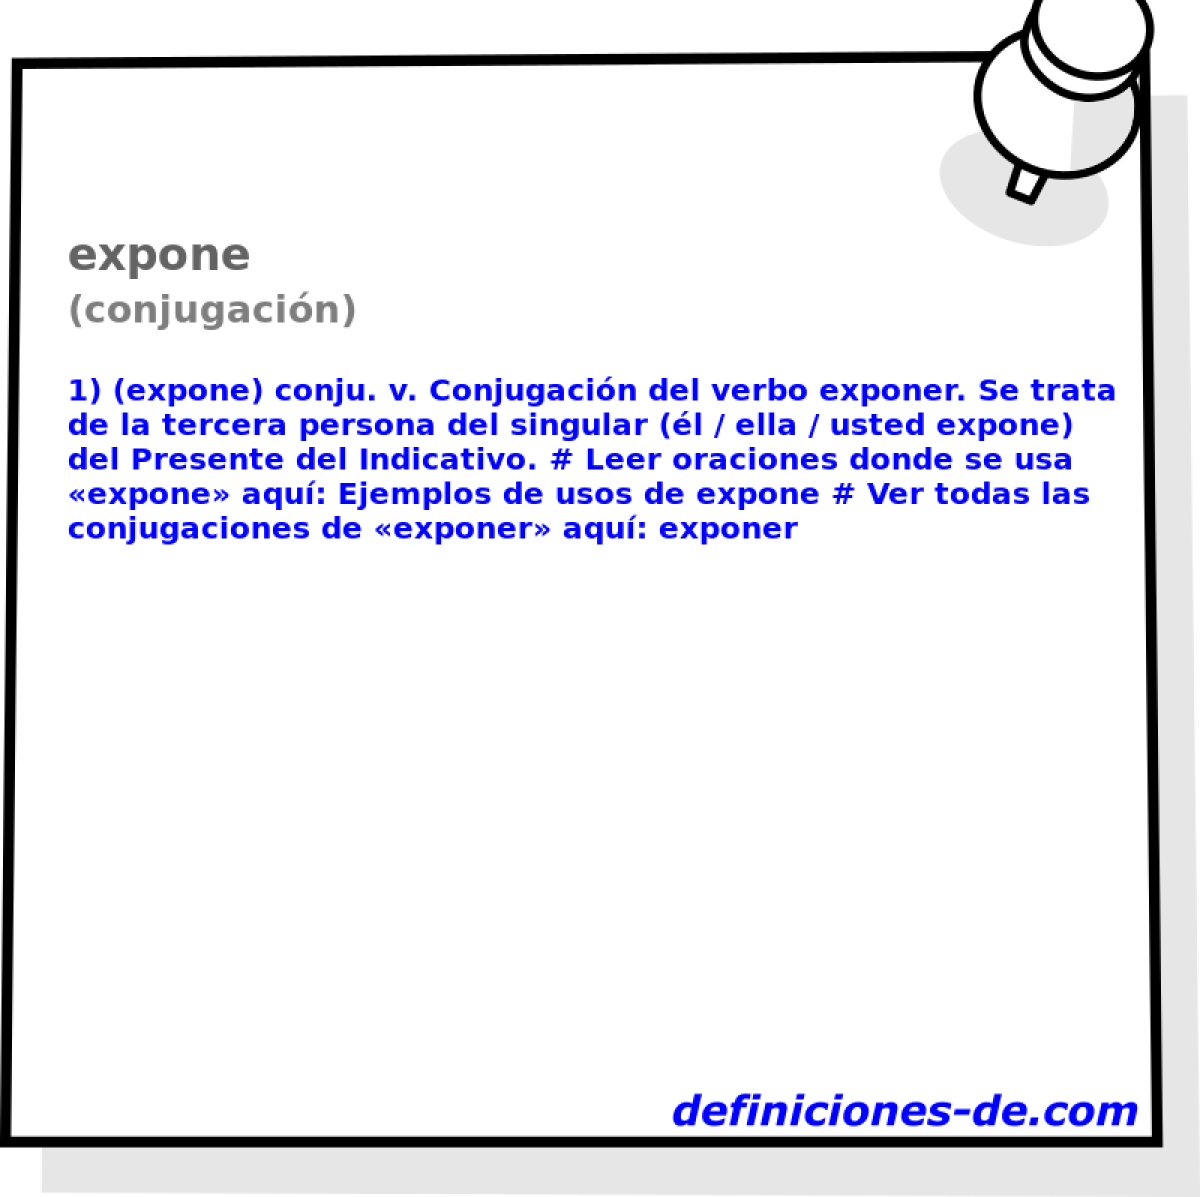 expone (conjugacin)